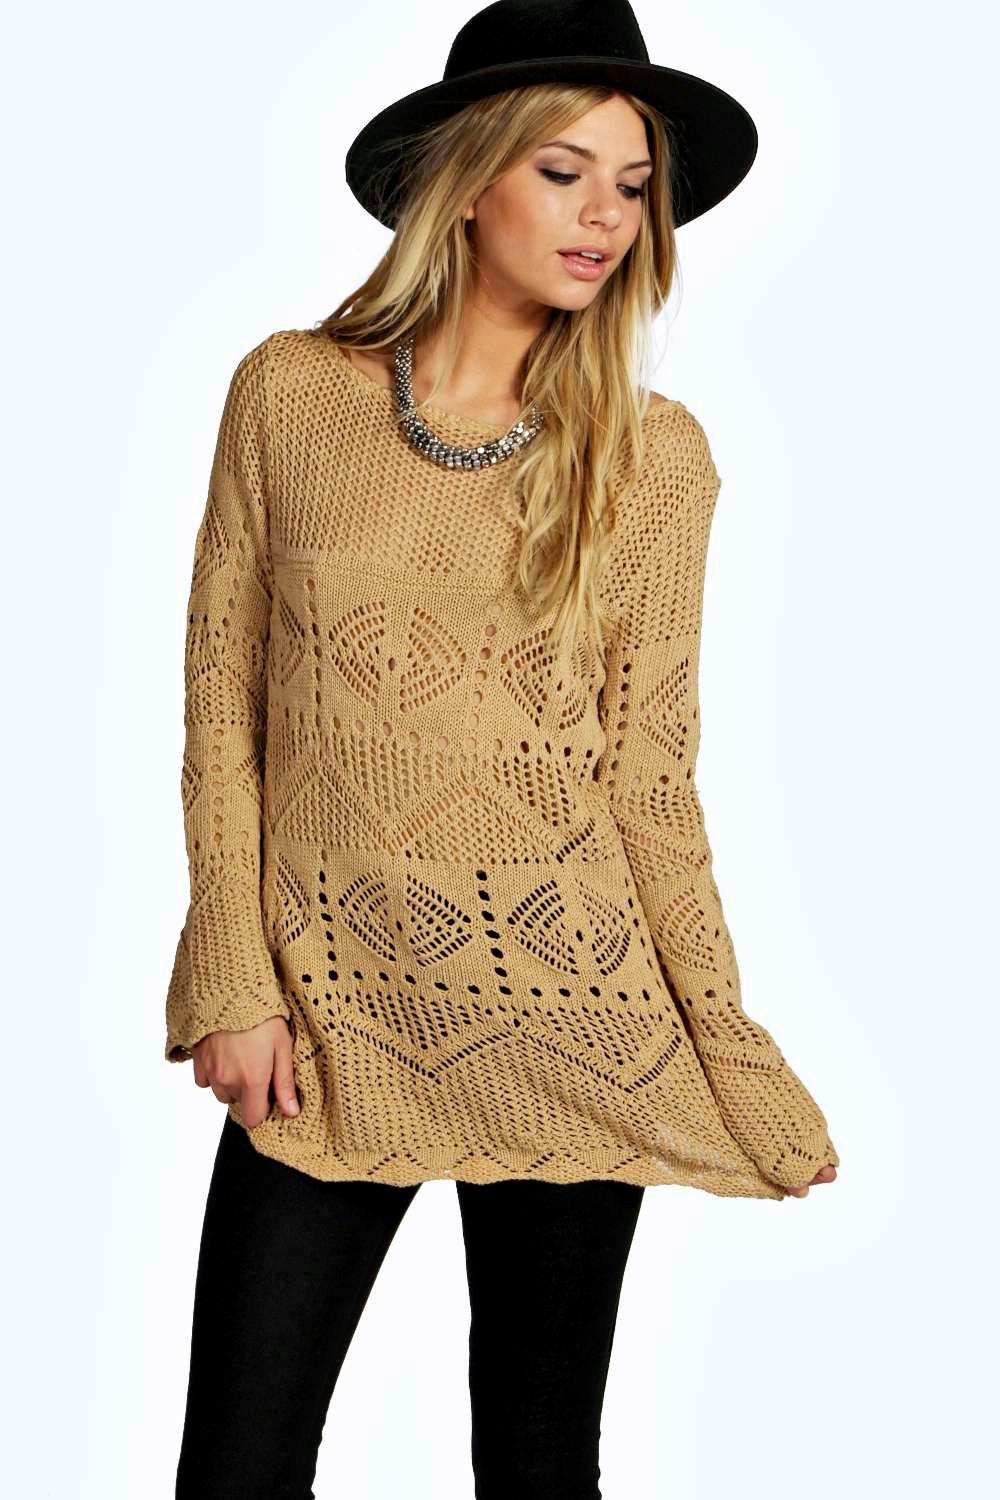 Boohoo Womens Tessa Crochet Knit Tunic Jumper in Camel size S/M | eBay